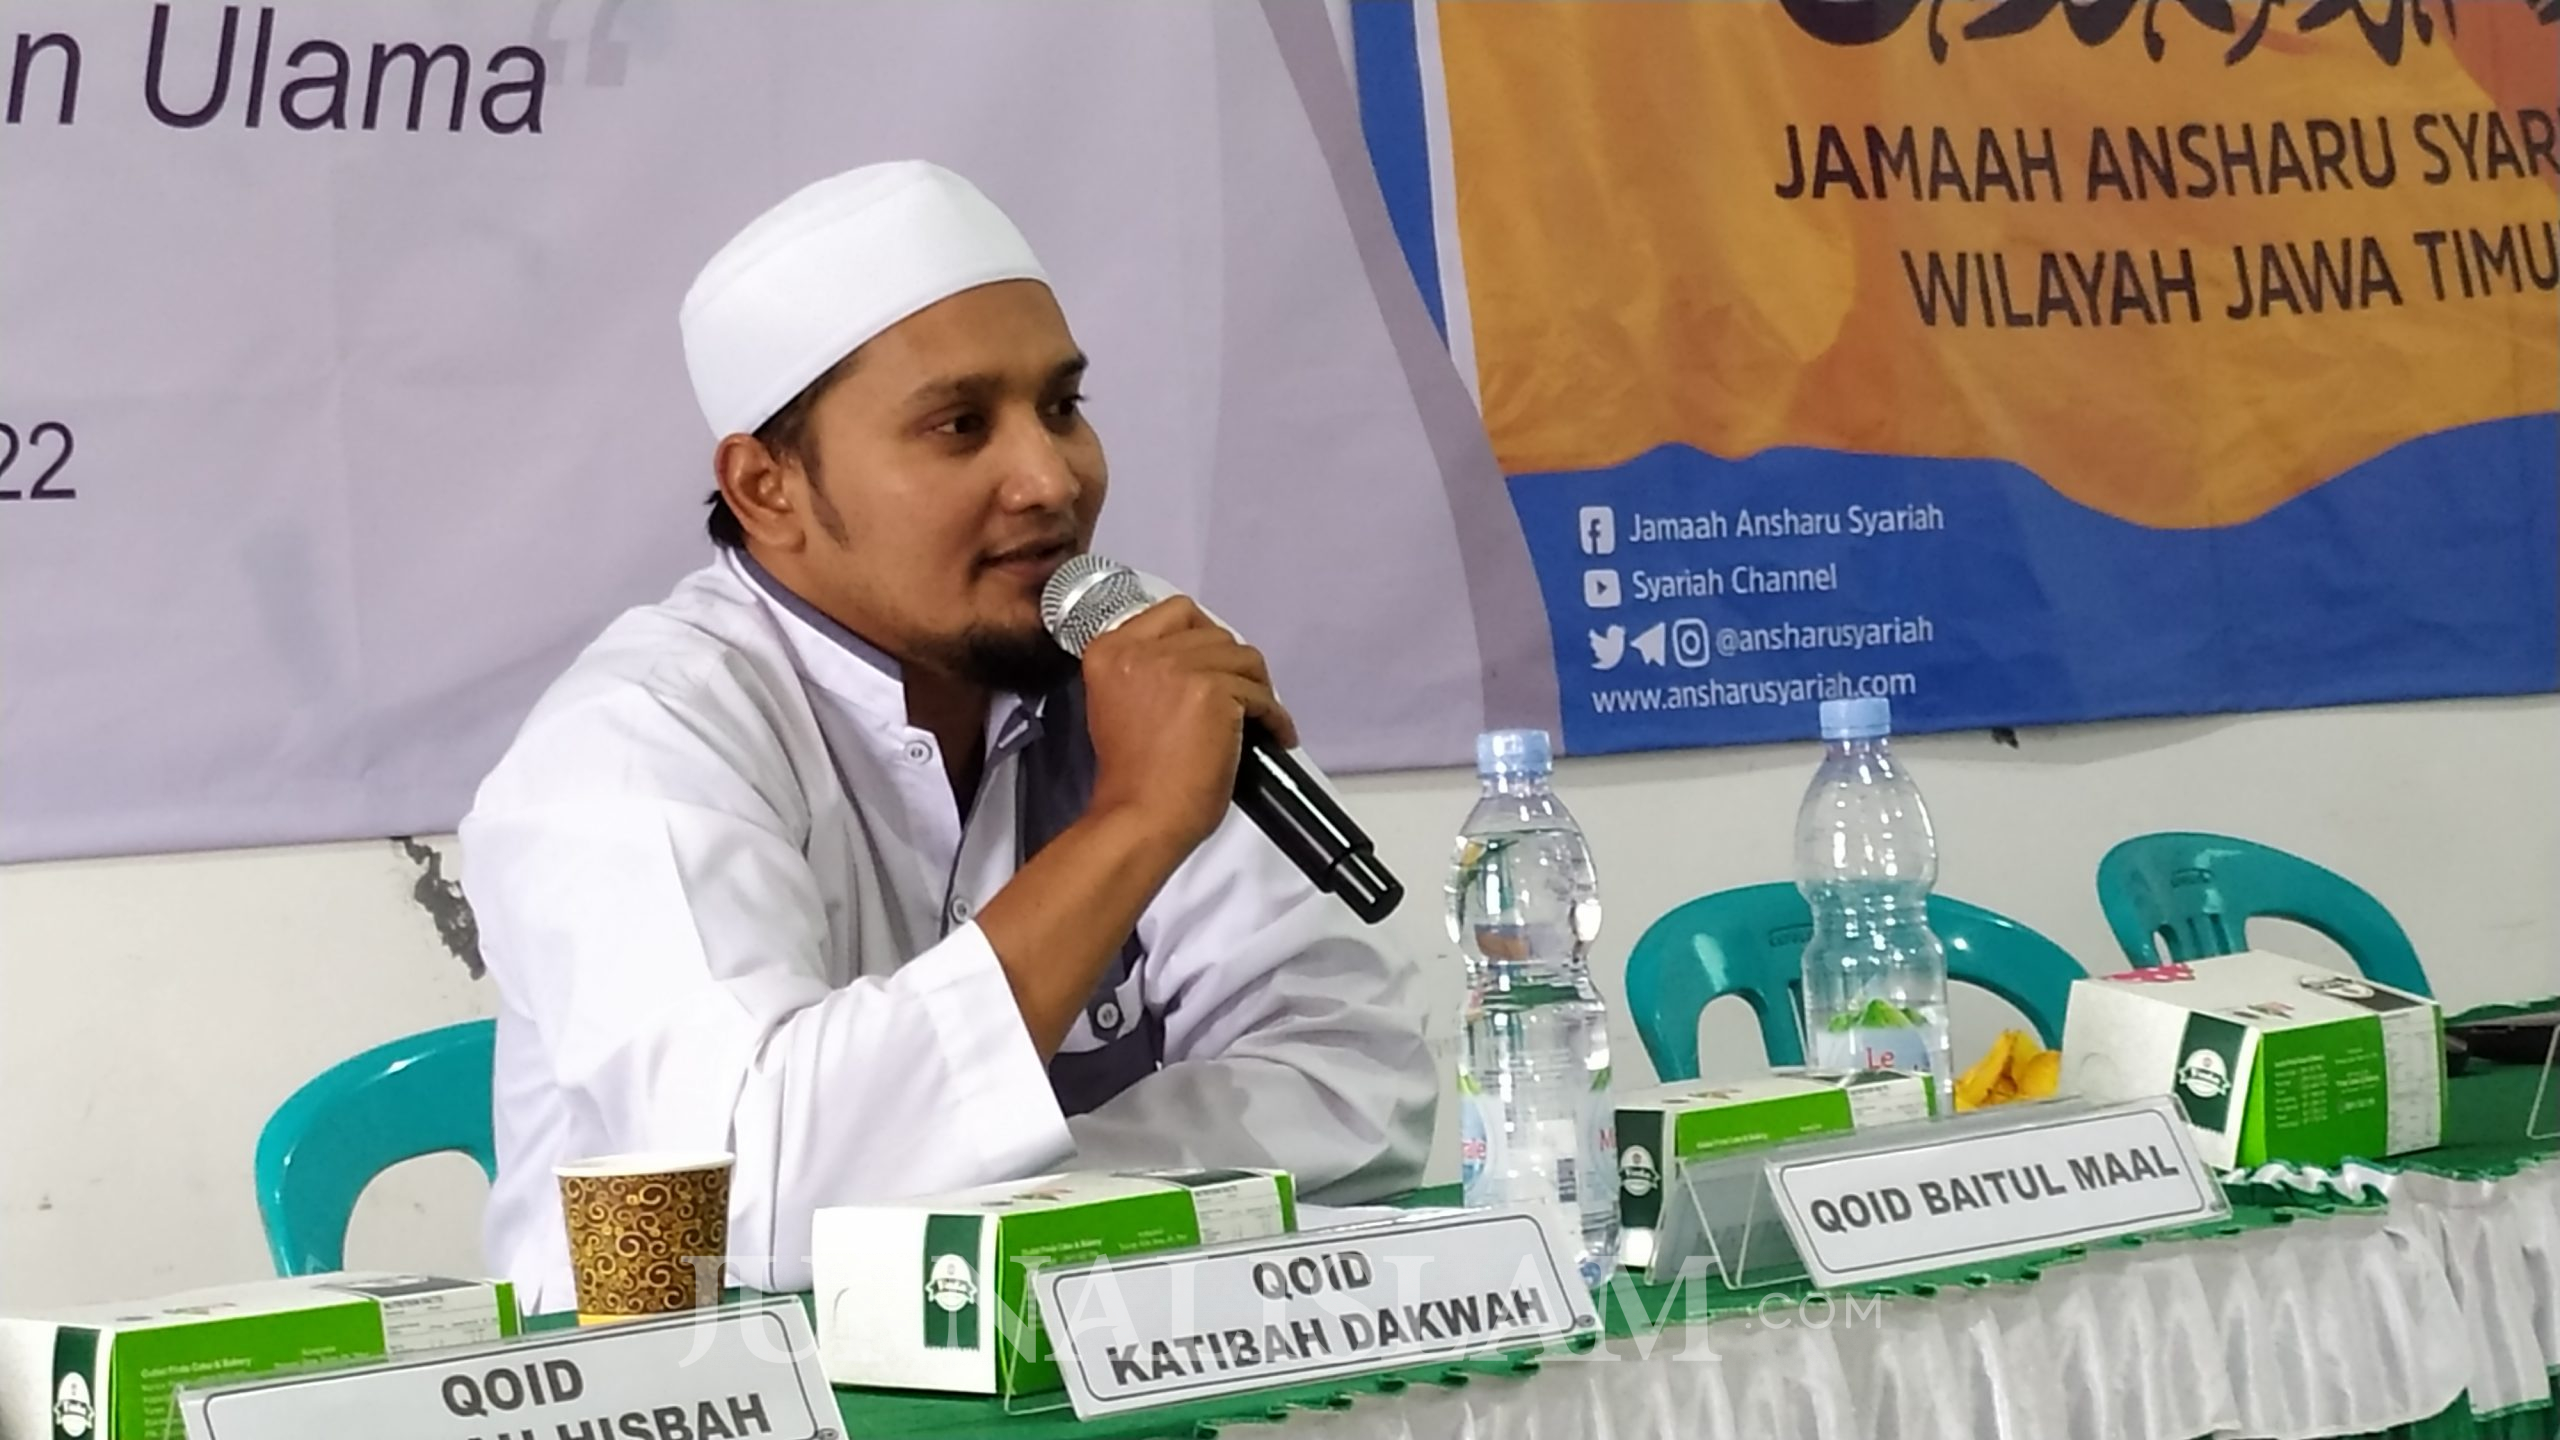 Tanggapi Sawer Qoriah, Amir Ansharusyariah Malang Ingatkan Adab Muslim Ketika Mendengar Ayat Al-Qur’an